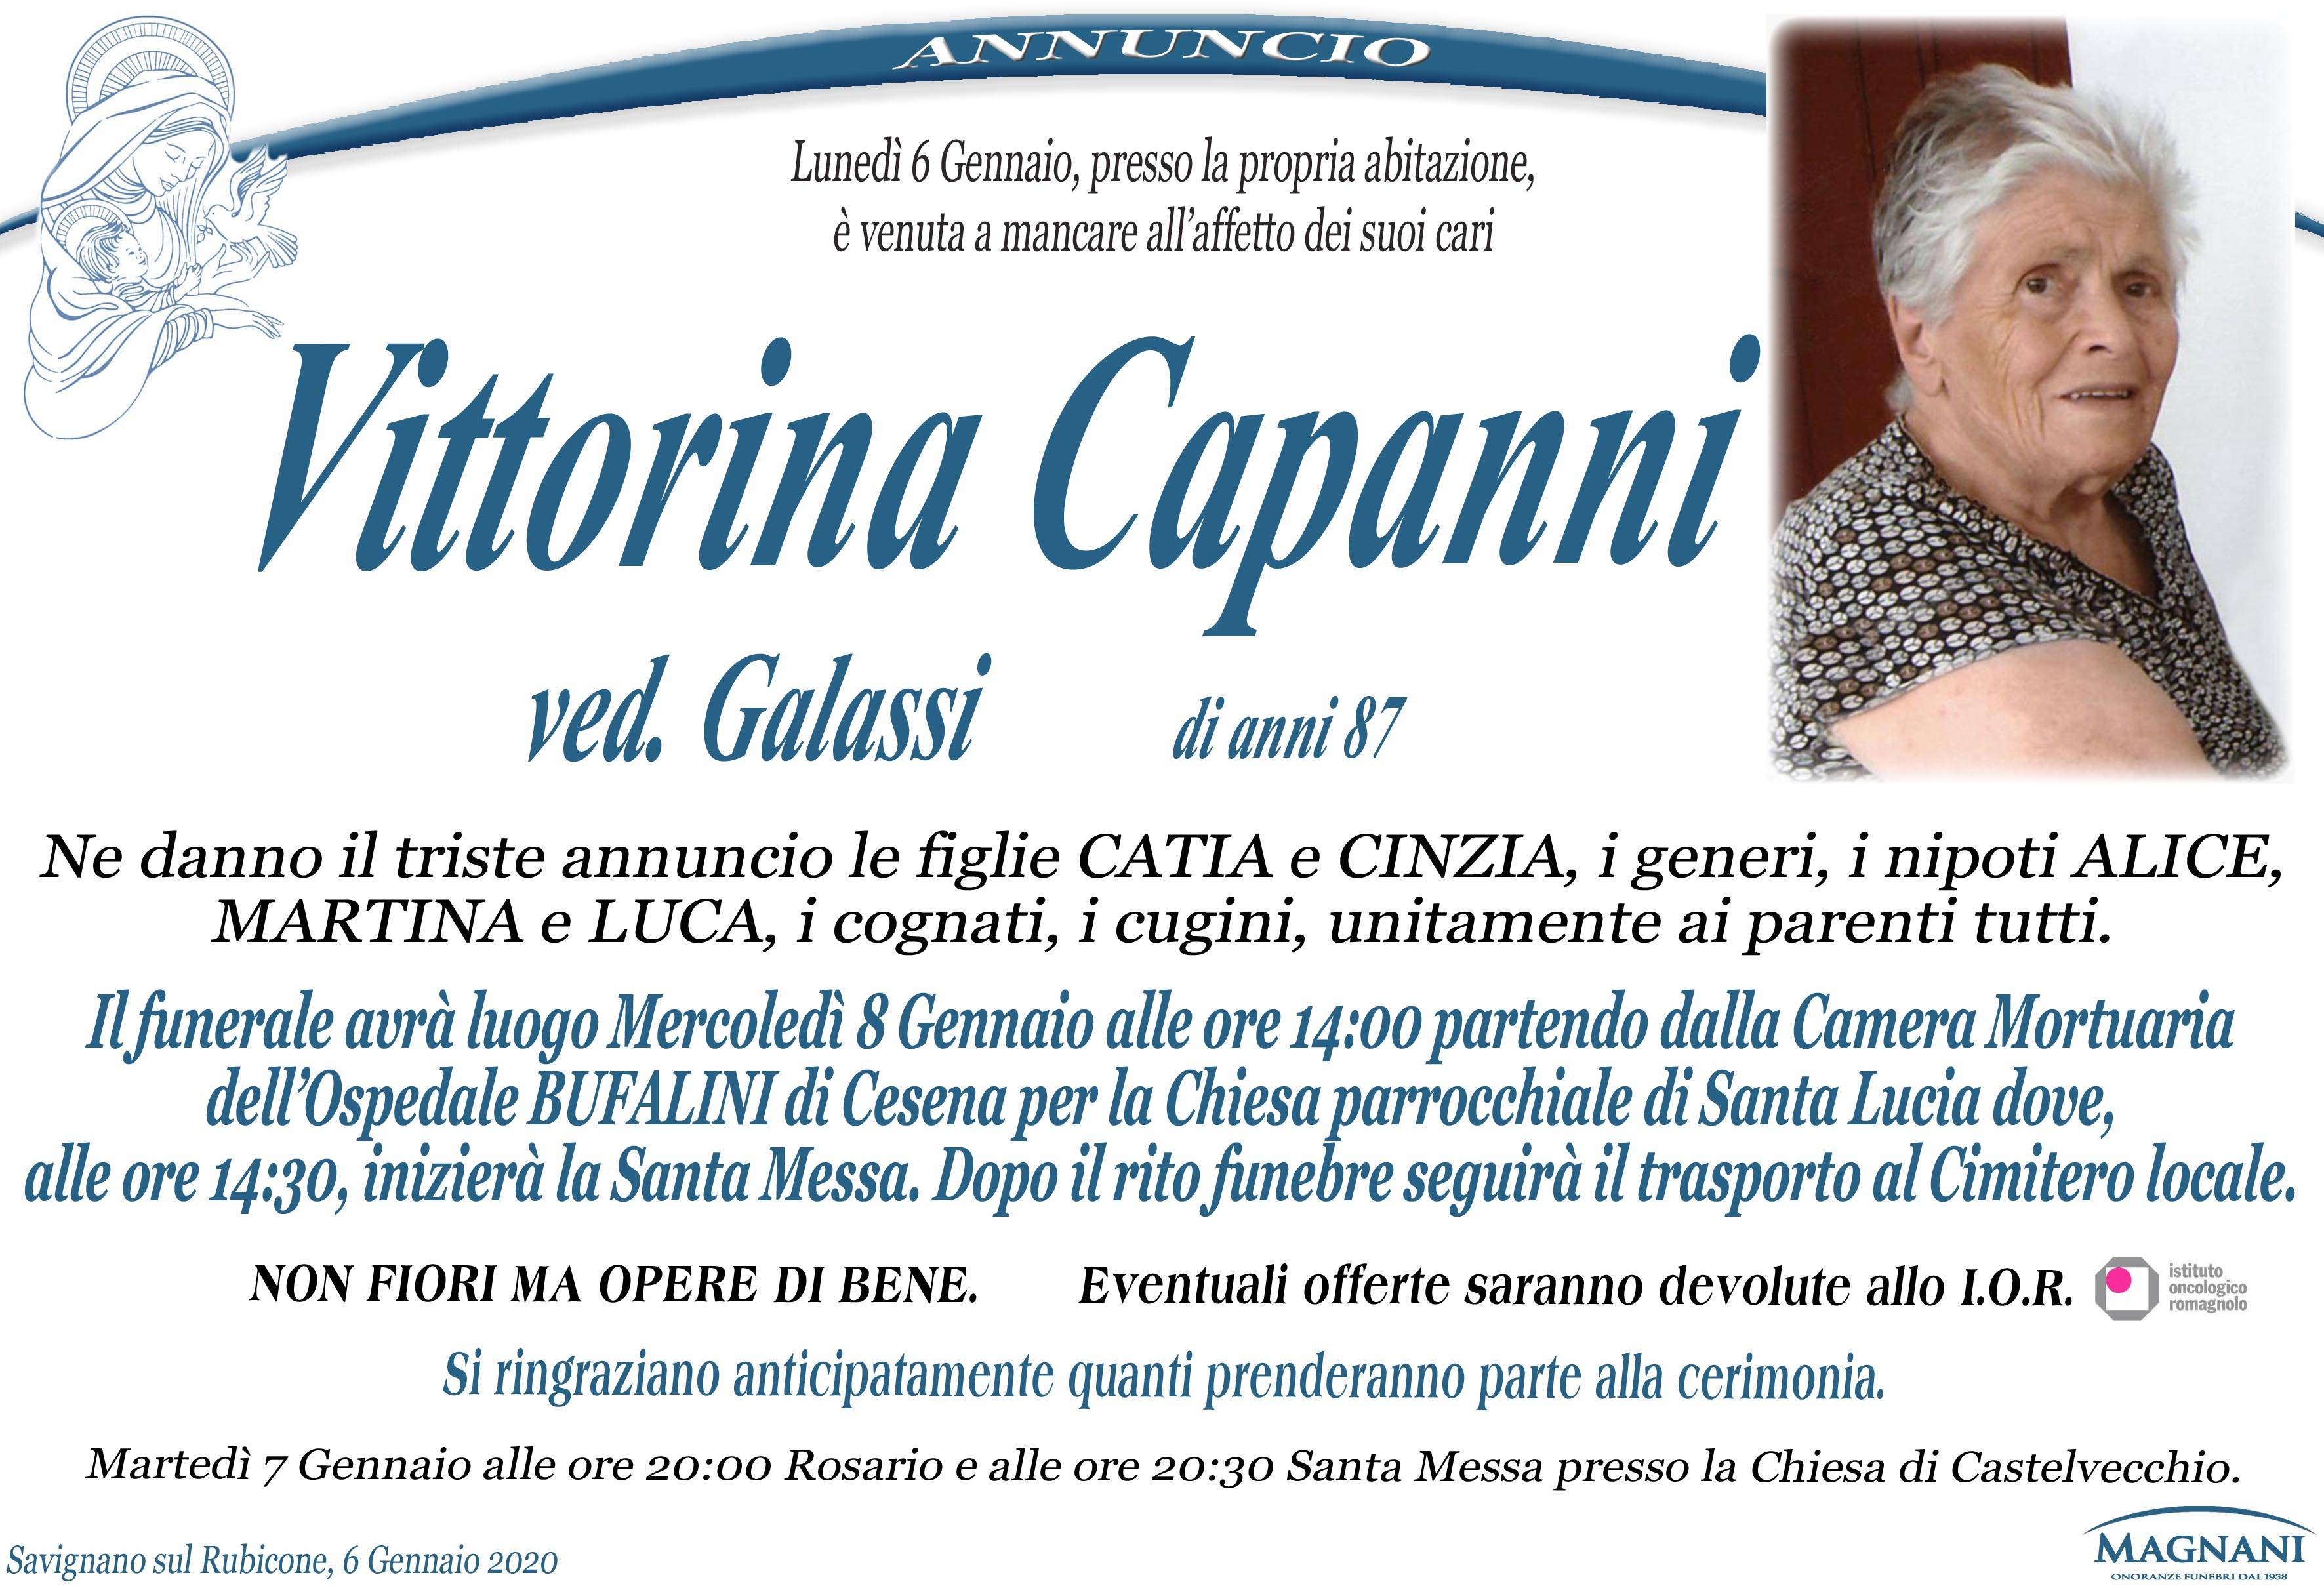 Vittorina Capanni